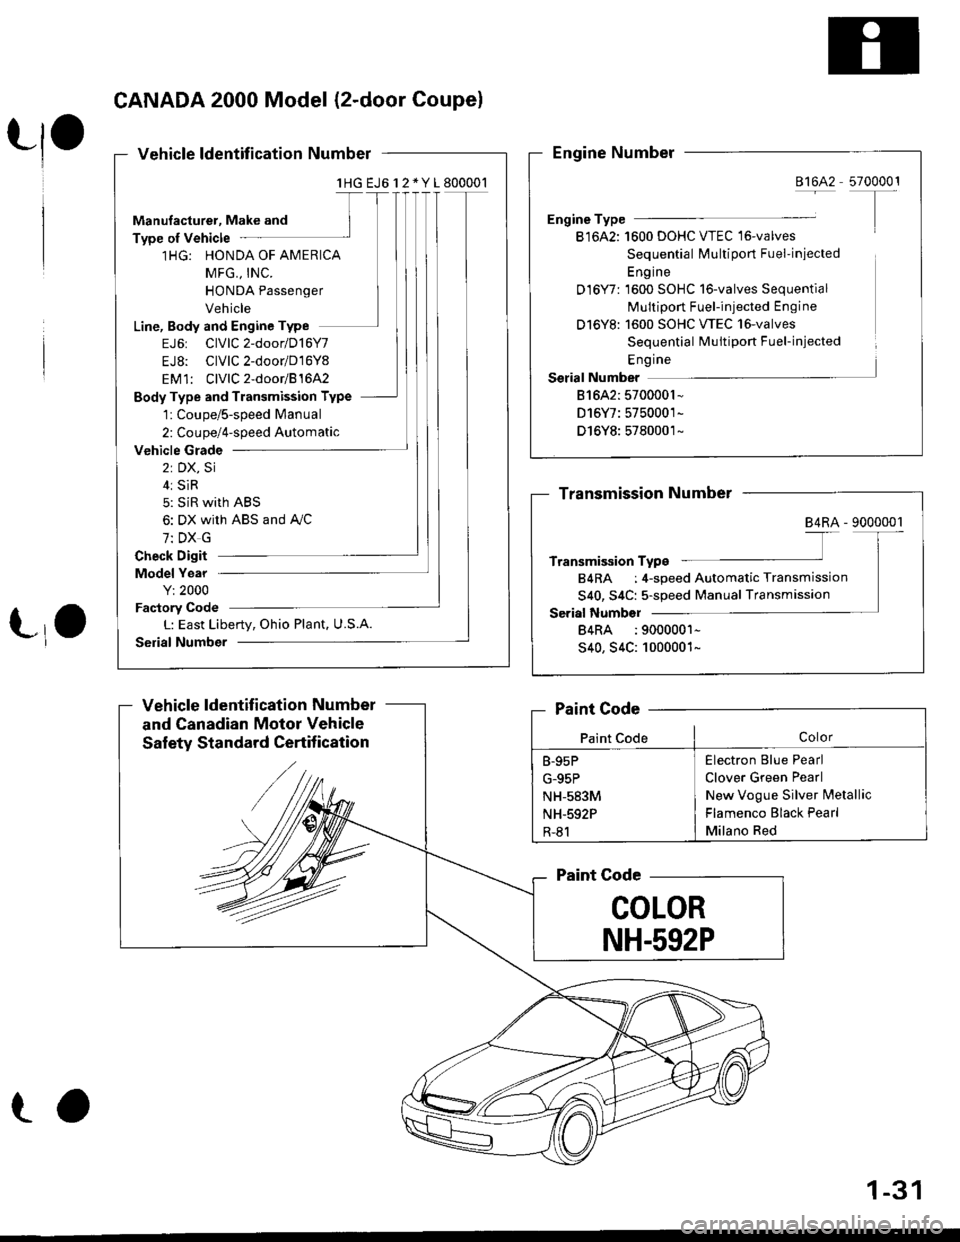 HONDA CIVIC 1998 6.G Workshop Manual CANADA 2000 Model (2-door Coupel
Vehicle ldentification Number
lHG EJ6l 2 * Y 1800001
Manufacturer, Make and
Type of Vehicle
1HG: HONDA OF AMERICA
MFG,, INC.
HONDA Passenger
Vehicle
Line, Body and En